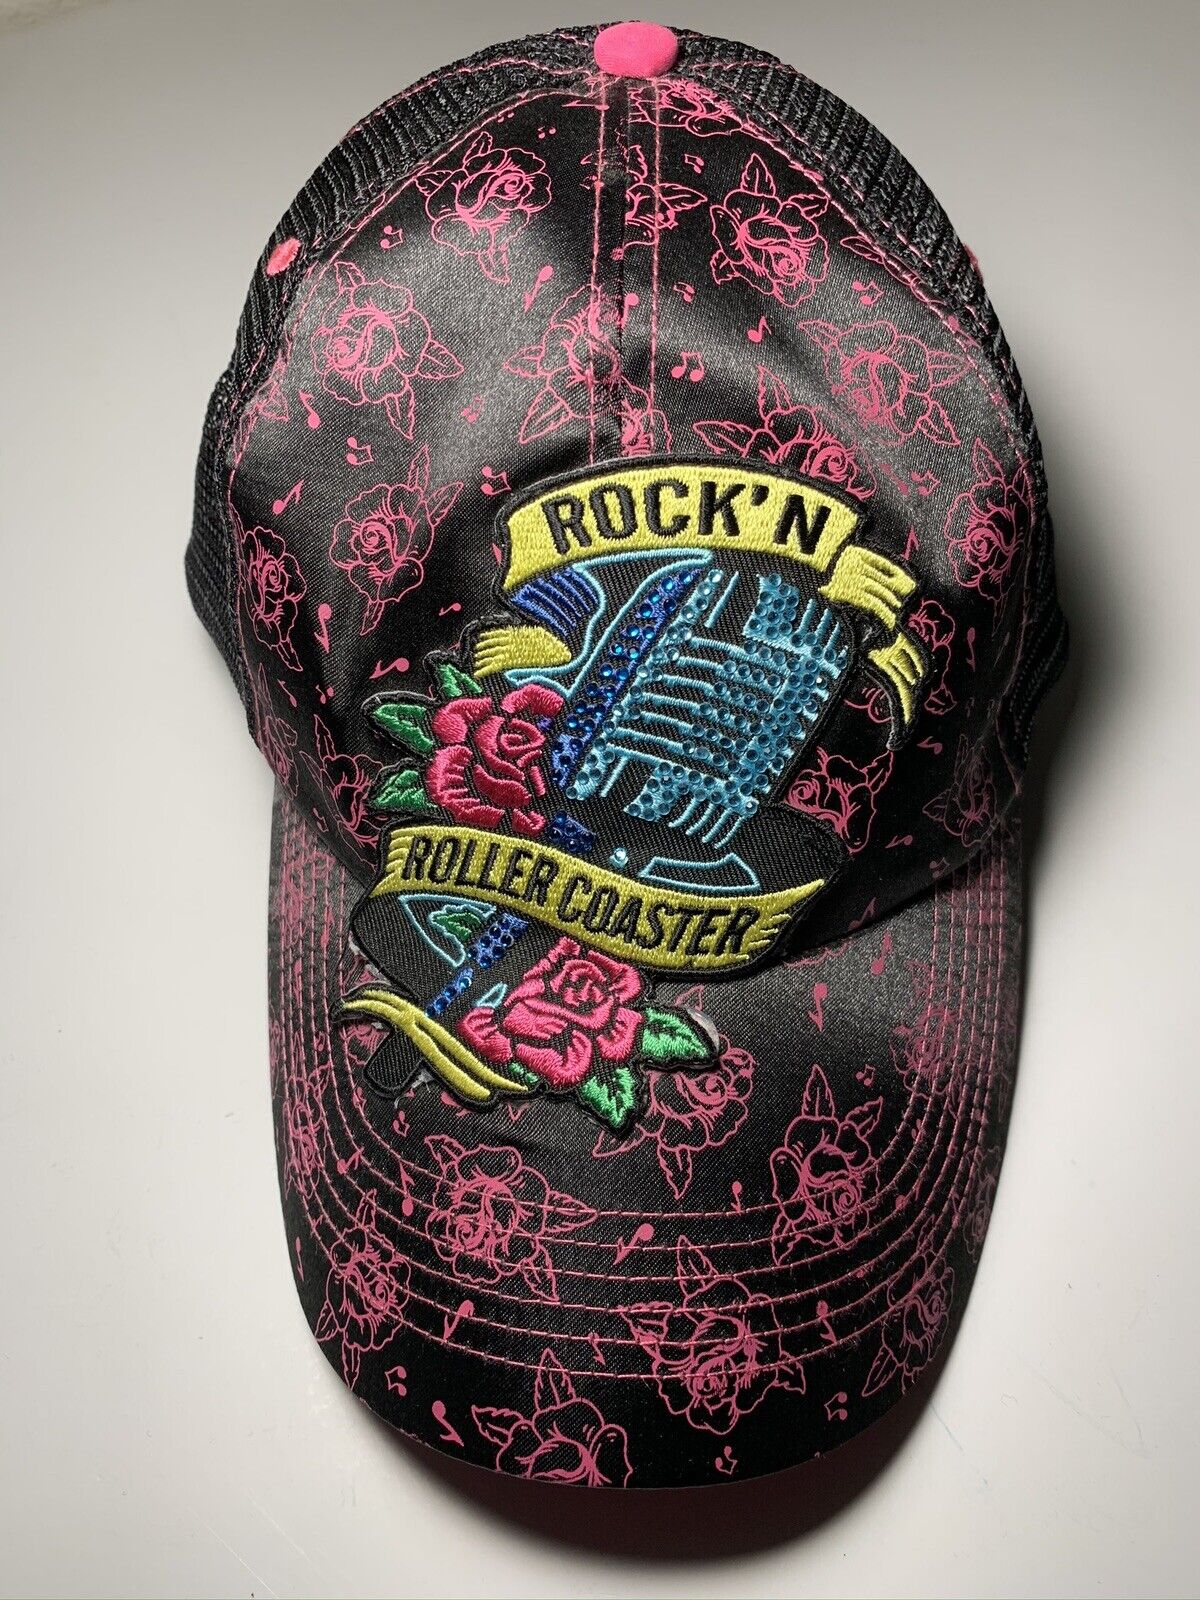 Disney Rock'N'Roller Coaster Baseball Cap Black/Red Roses Printed & Mic Patch 